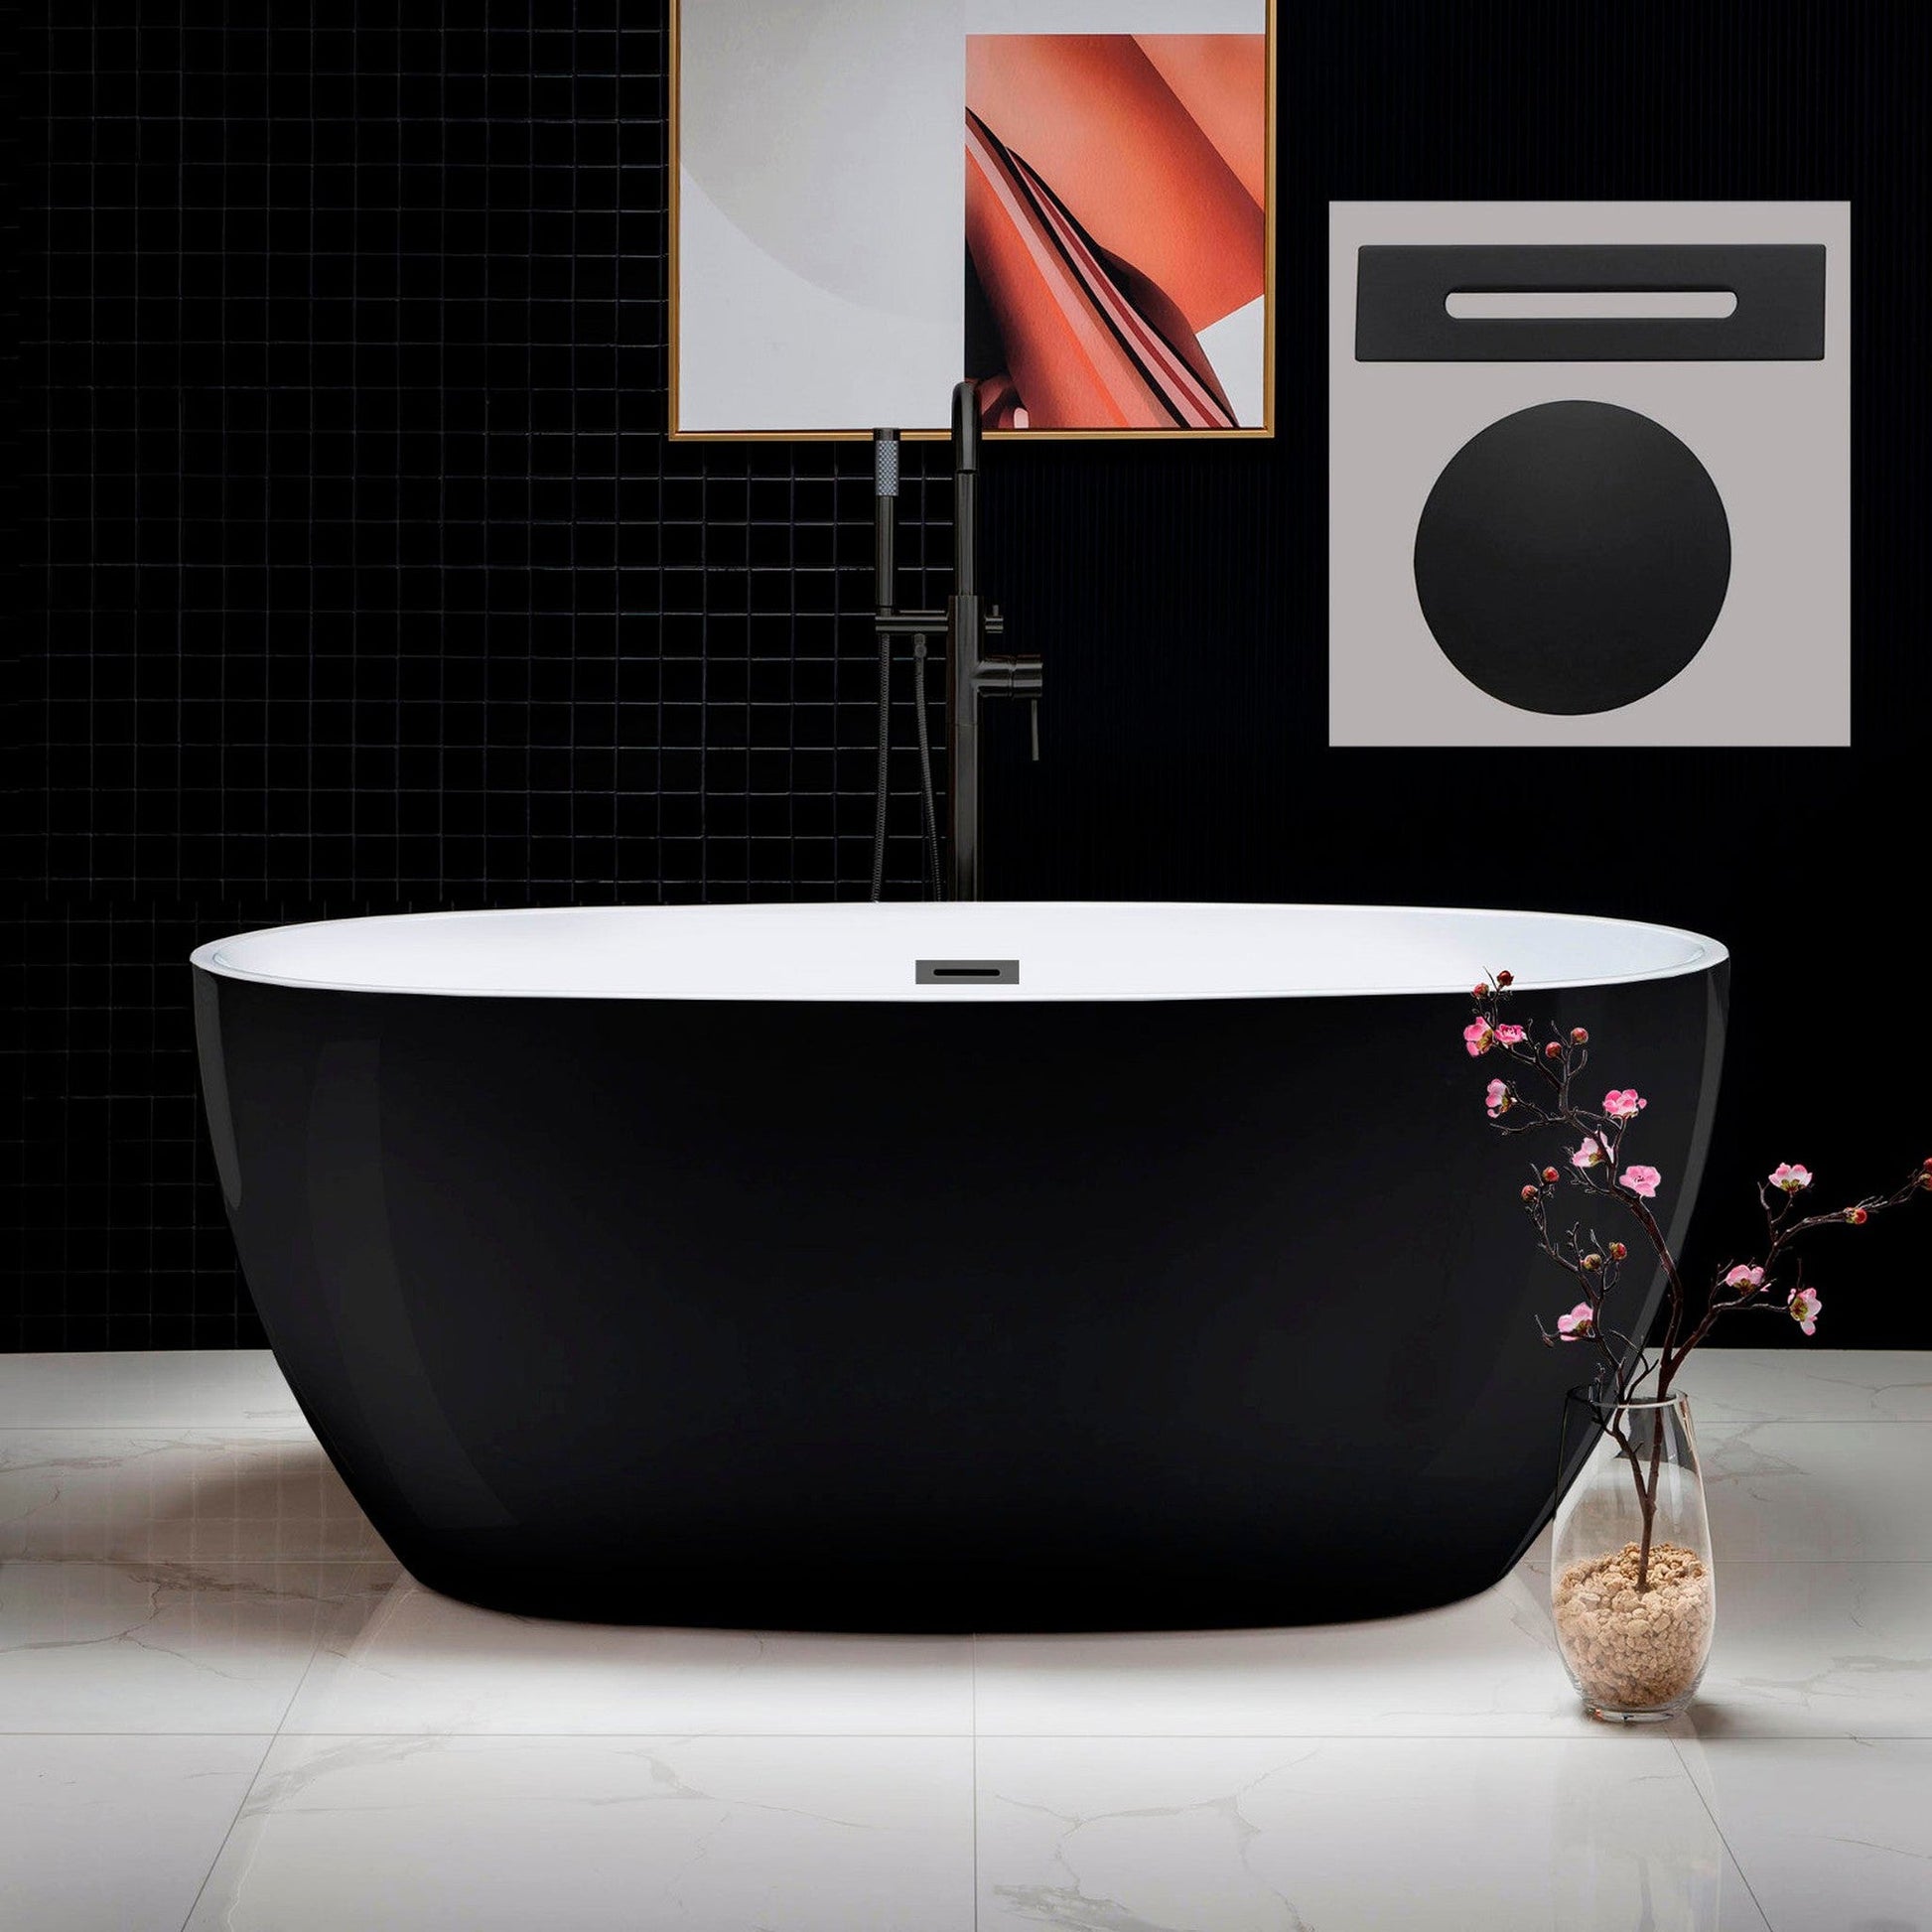 WoodBridge B1818 59" Black Acrylic Freestanding Soaking Bathtub With Matte Black Drain, Overflow, F0037MB Tub Filler and Caddy Tray